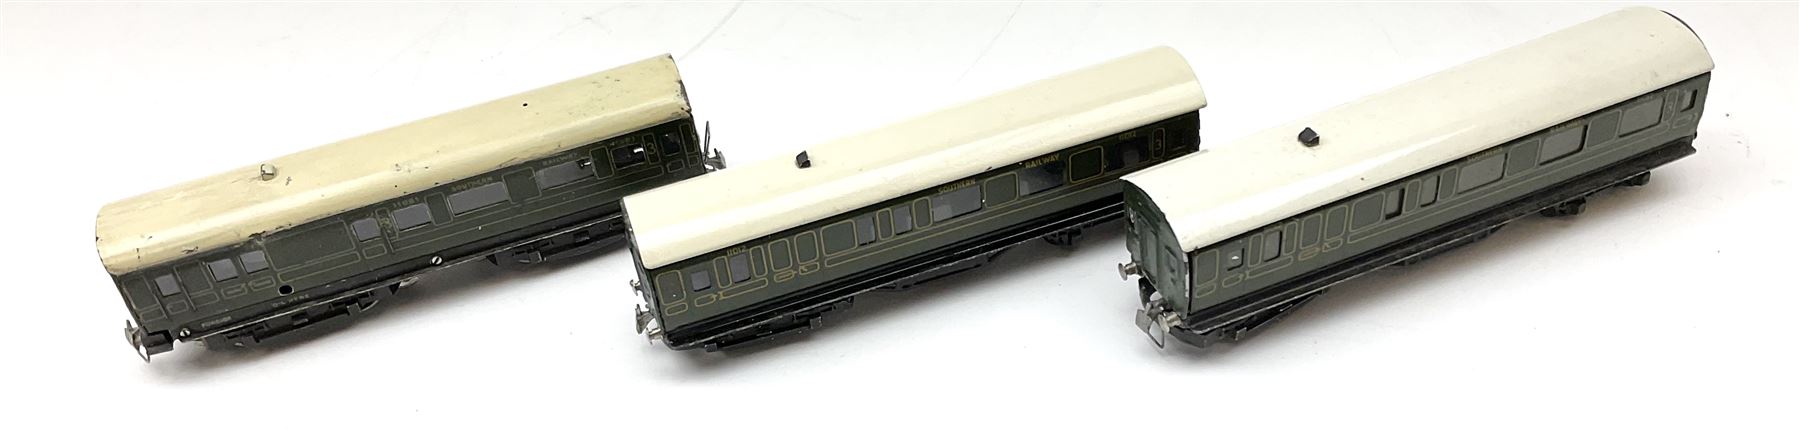 Trix Twin - three-rail Southern EMU three-car set No.11081; unboxed (3) - Image 2 of 3